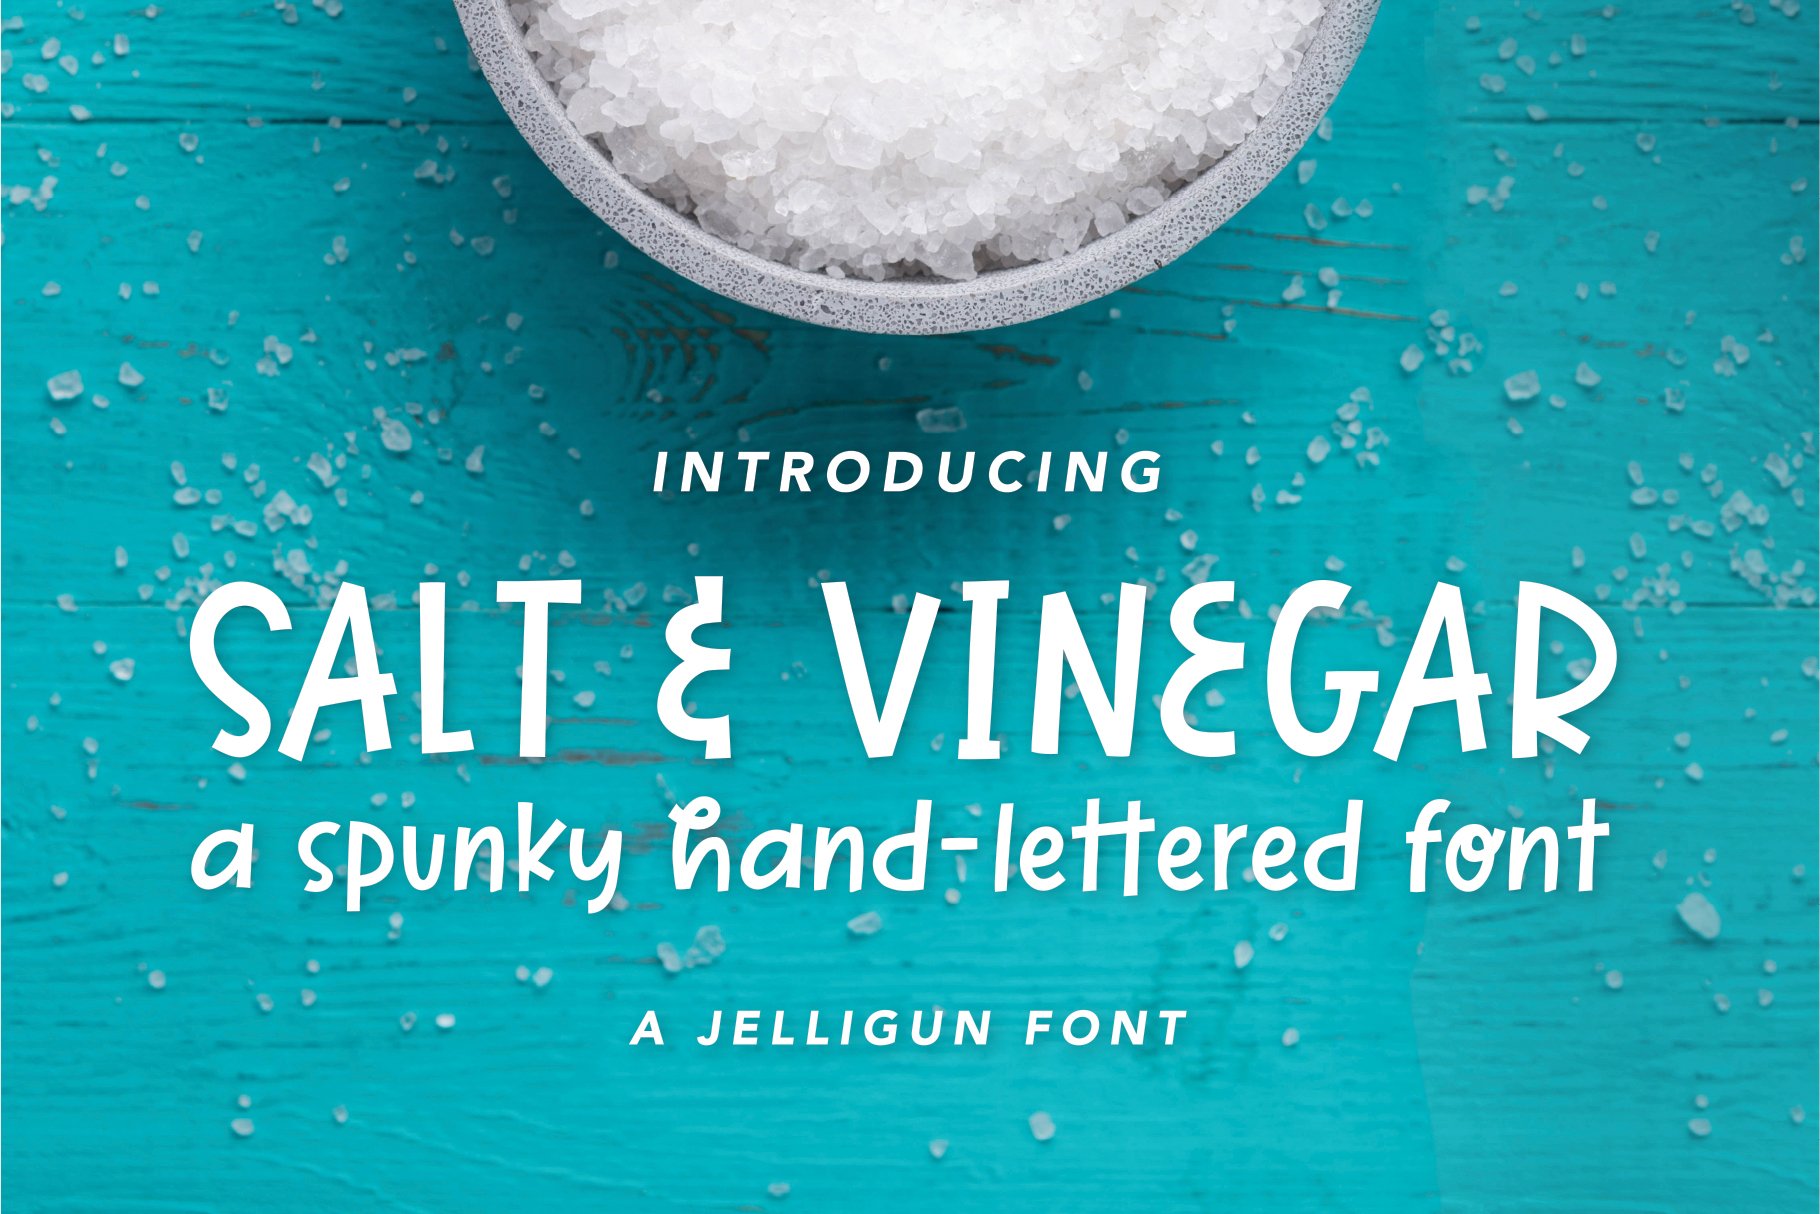 Salt & Vinegar | A Spunky Block Font cover image.